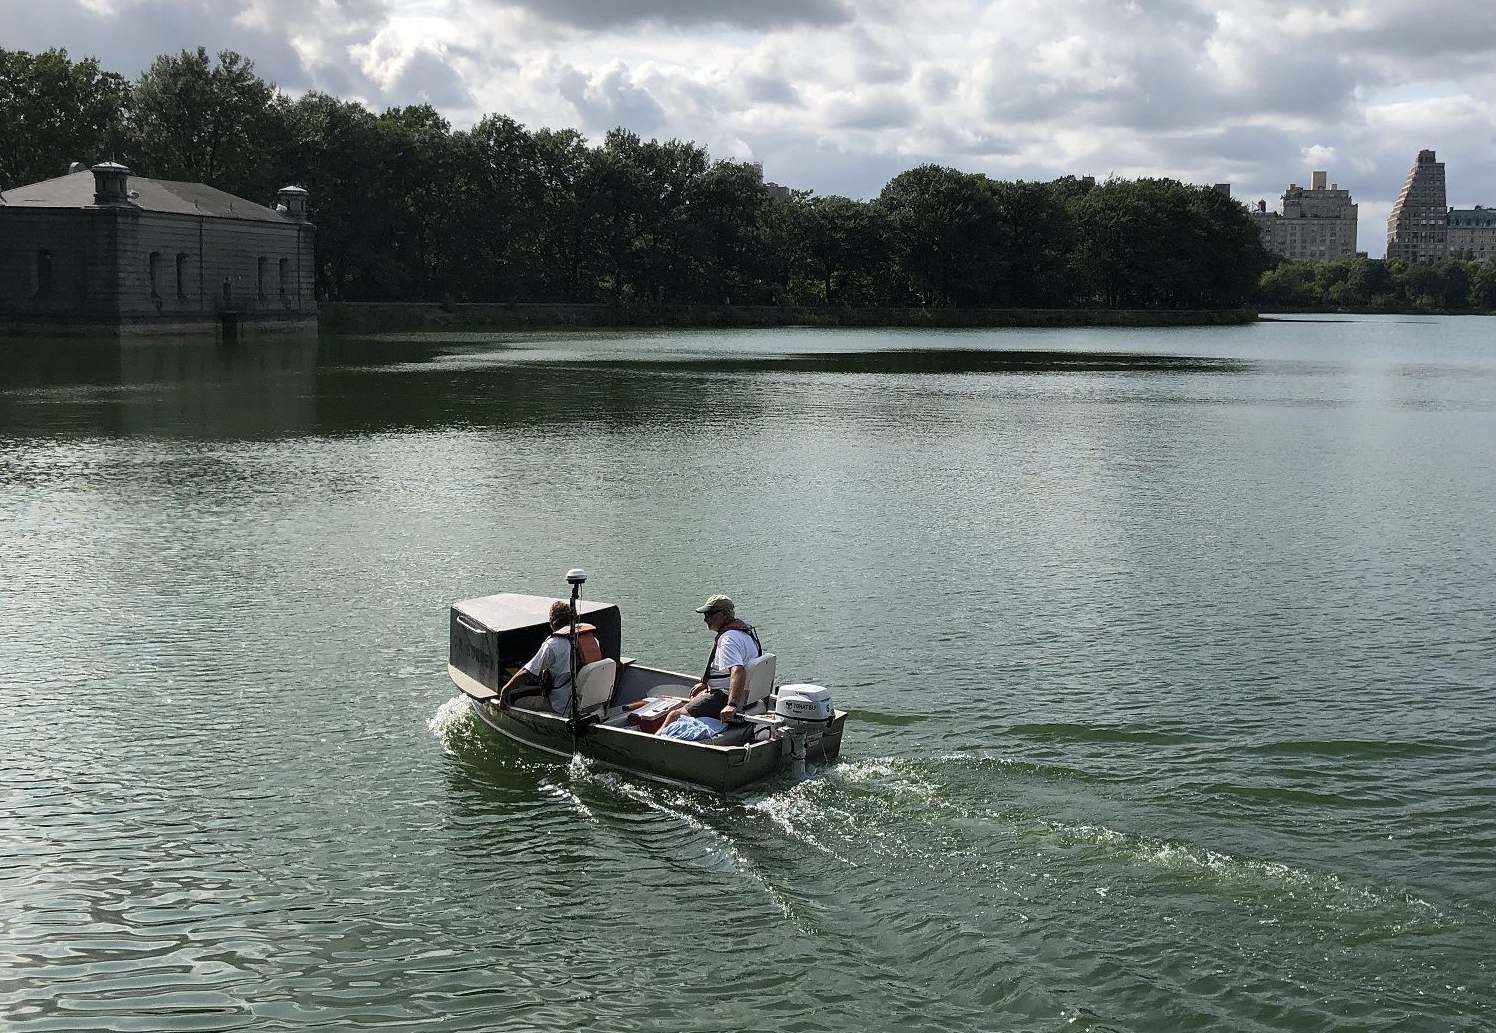 12 ft. skiff designed for shallow water bathymetry, geophysical surveys, sediment sampling, & water quality monitoring. Survey of Central Park Reservoir, NYC.